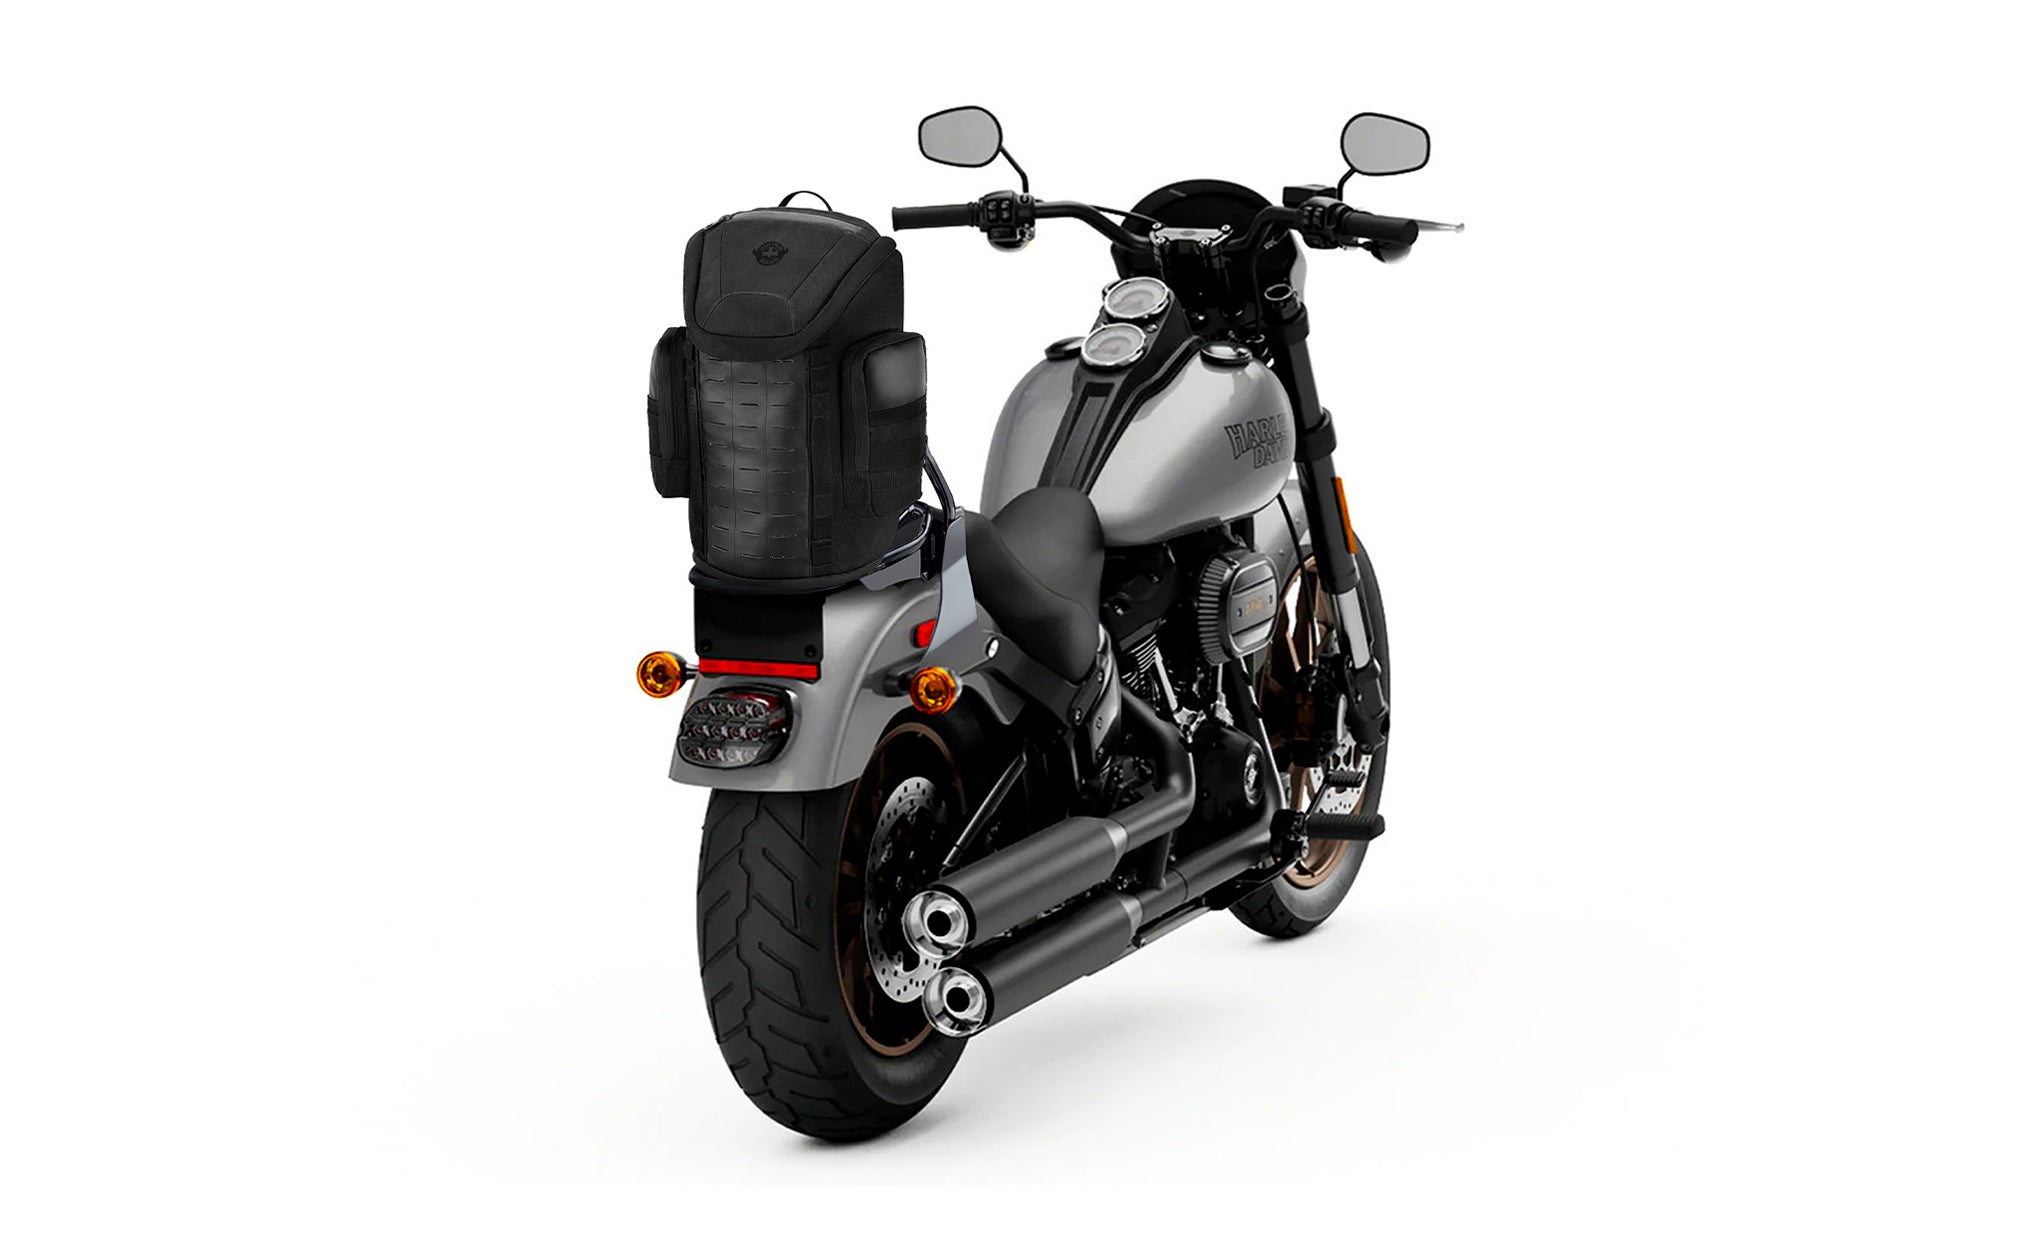 Viking Patriot Medium Triumph Motorcycle Sissy Bar Backpack Bag on Bike View @expand